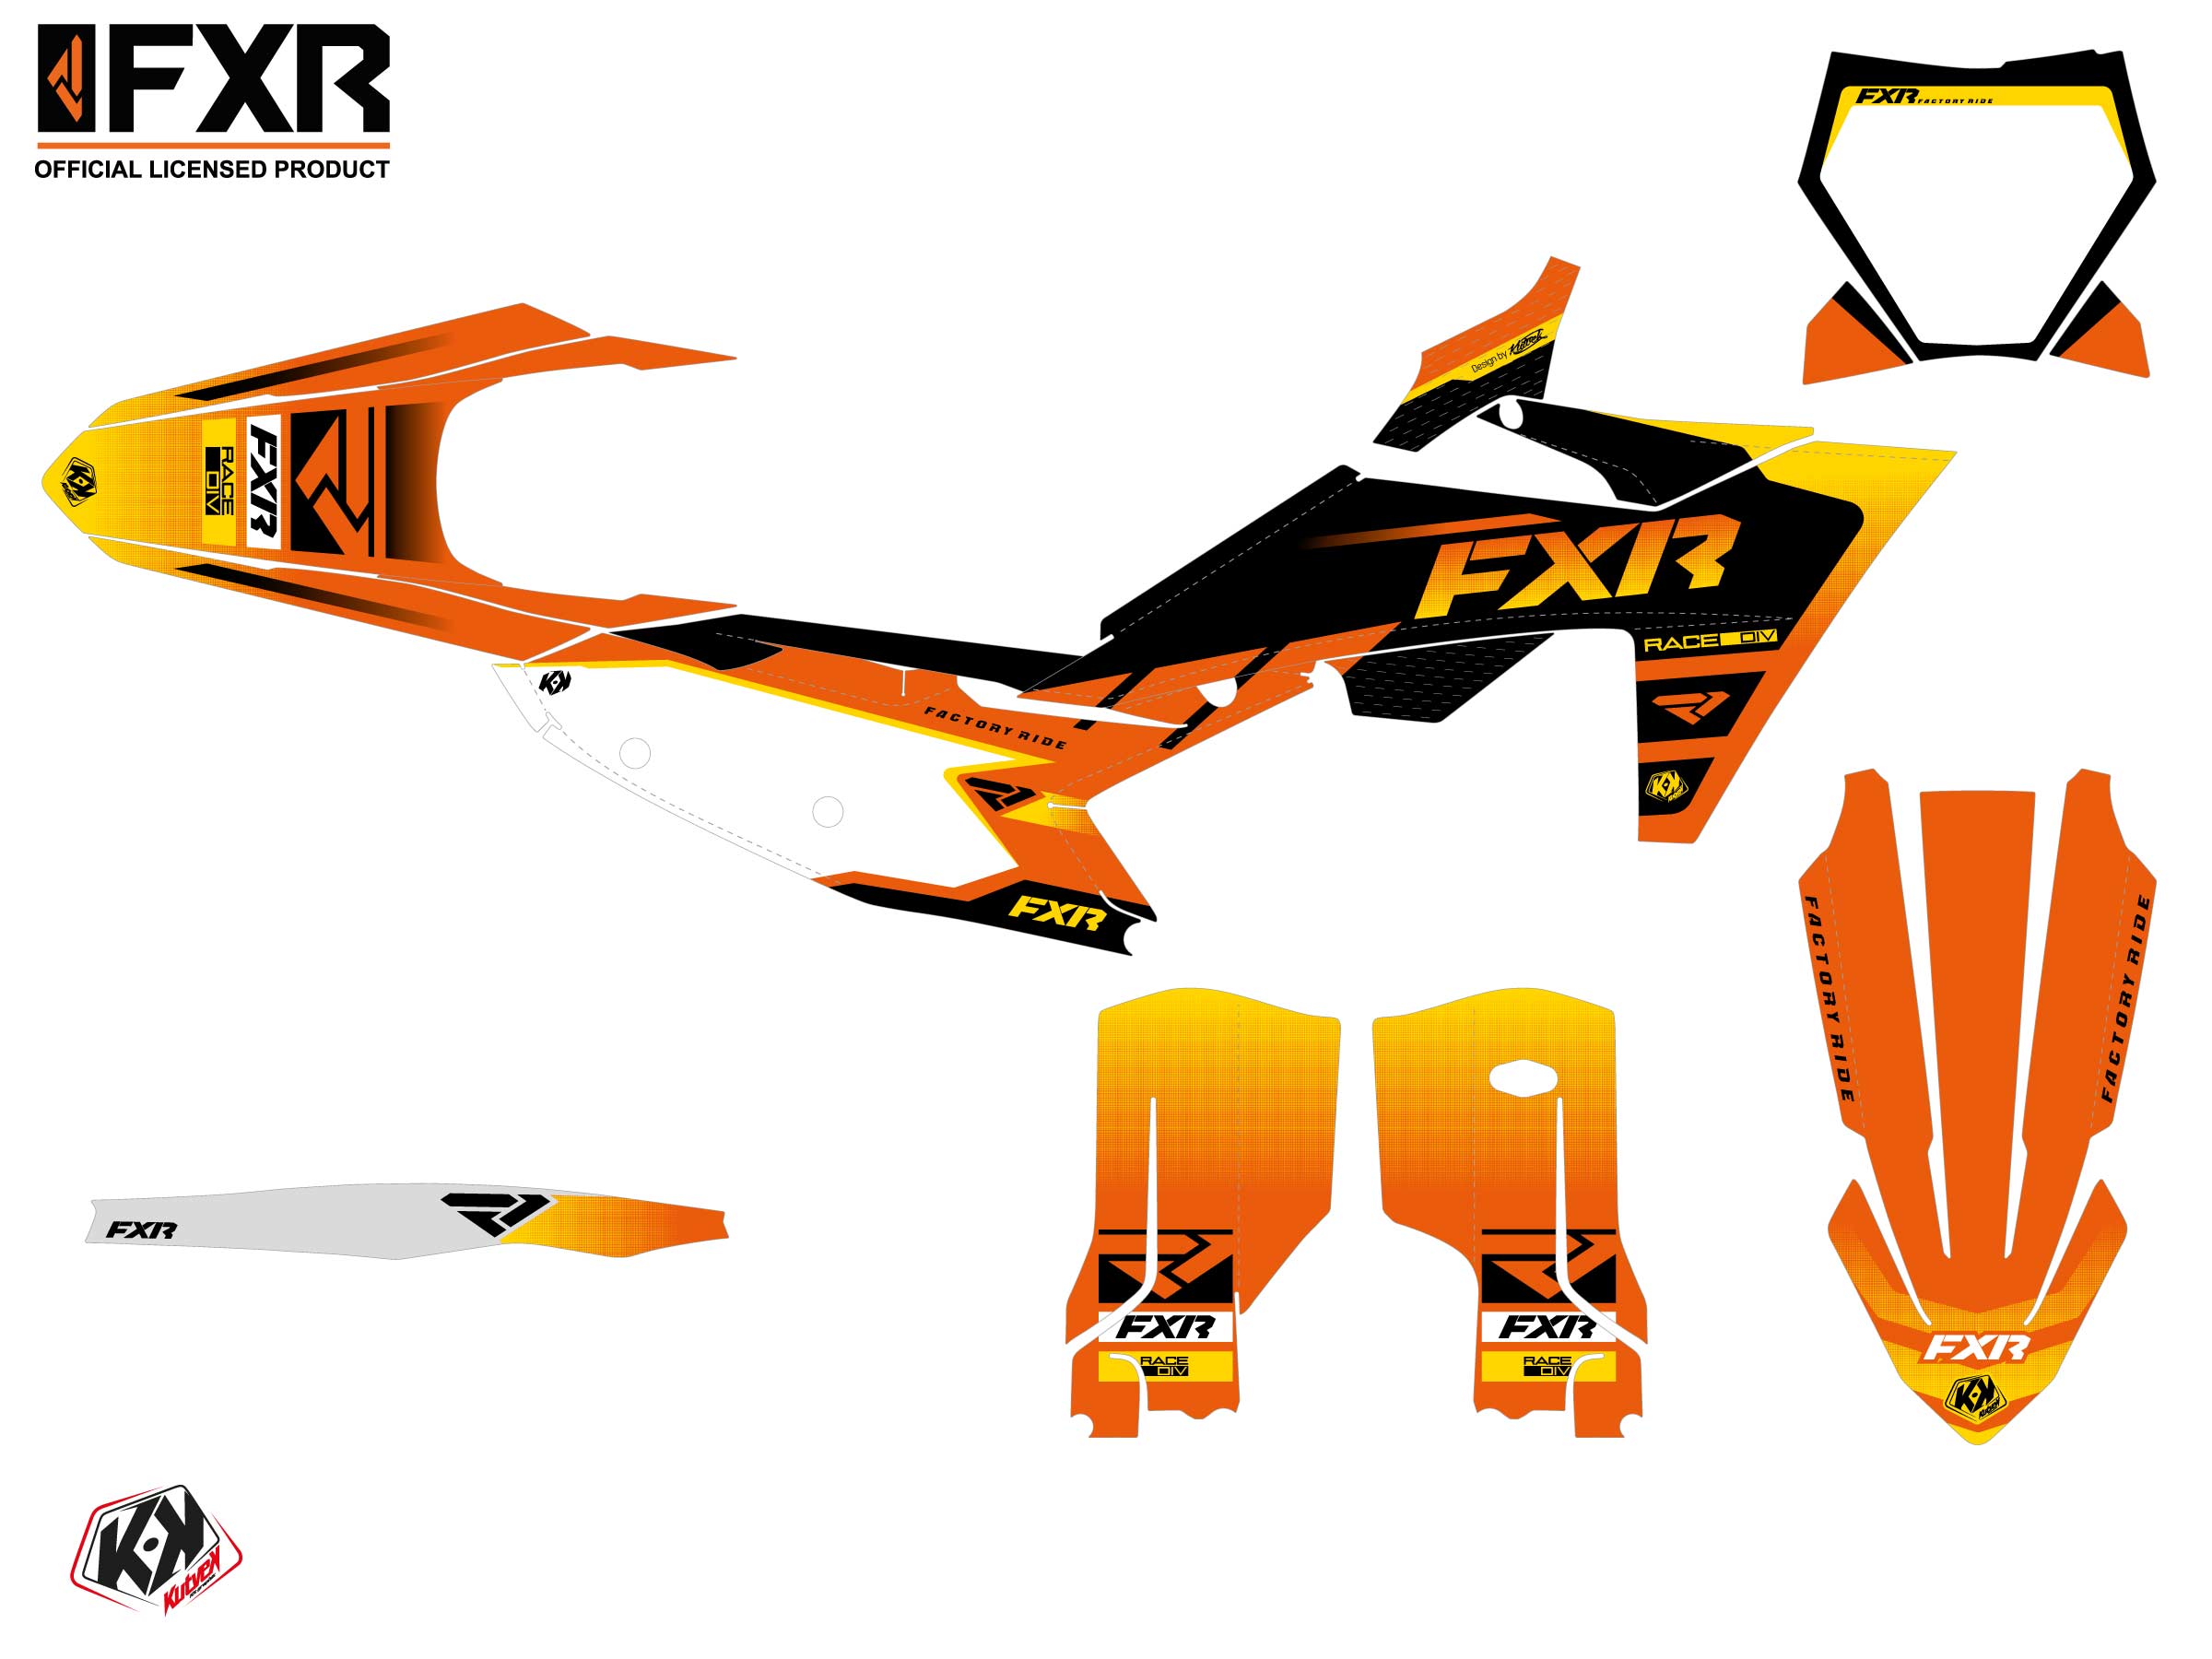 Ktm Sx 300 Dirt Bike Fxr Revo Graphic Kit Orange